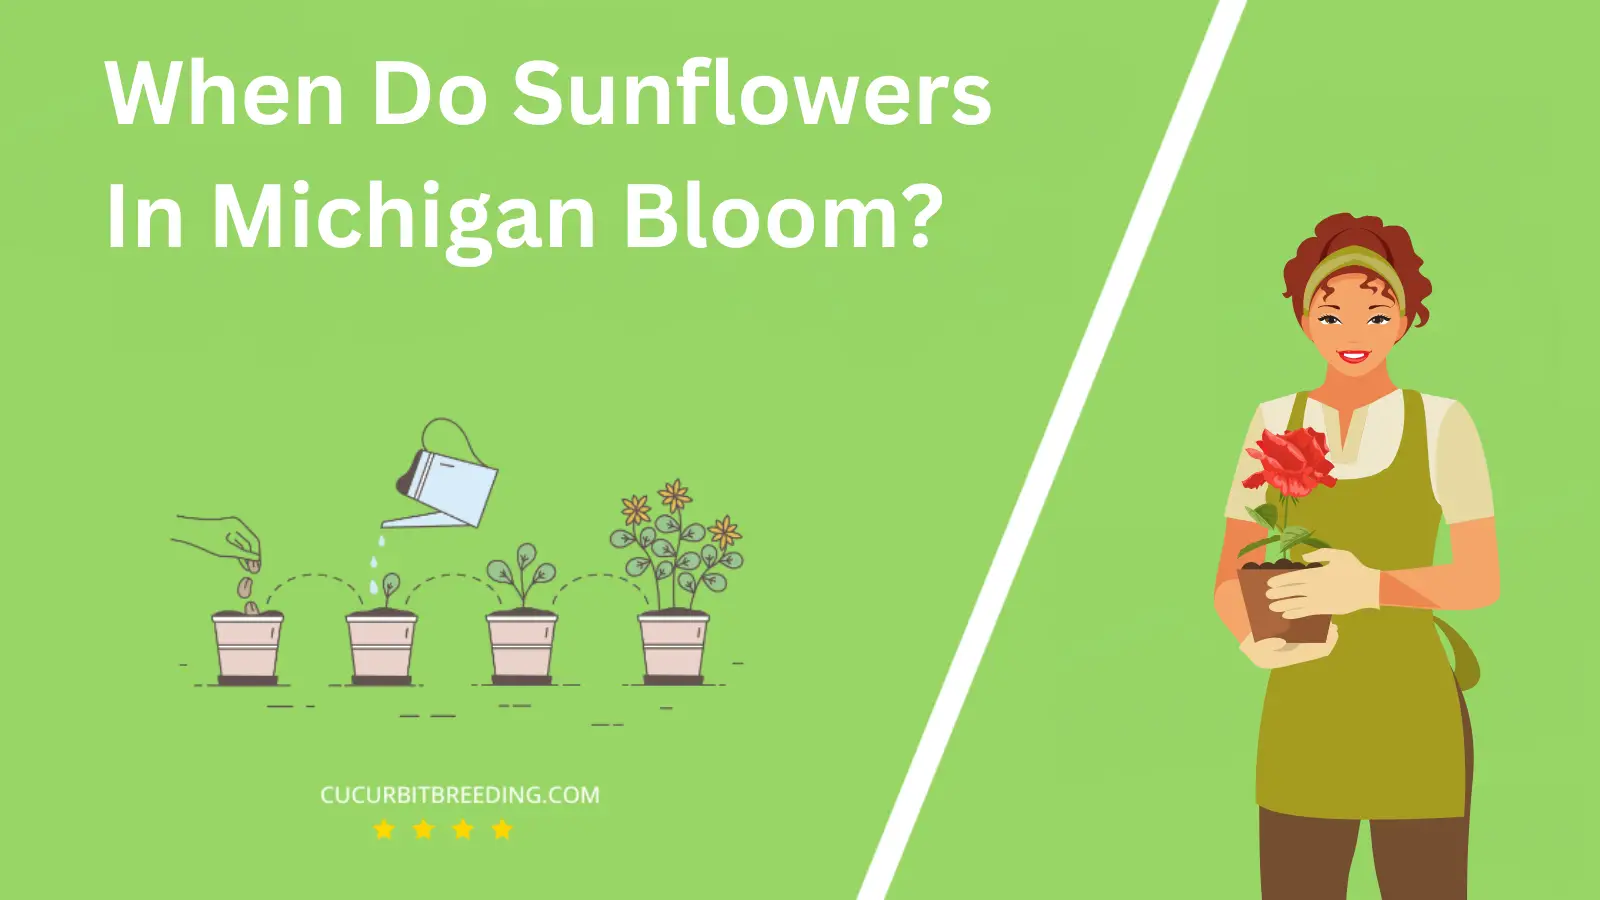 When Do Sunflowers In Michigan Bloom?